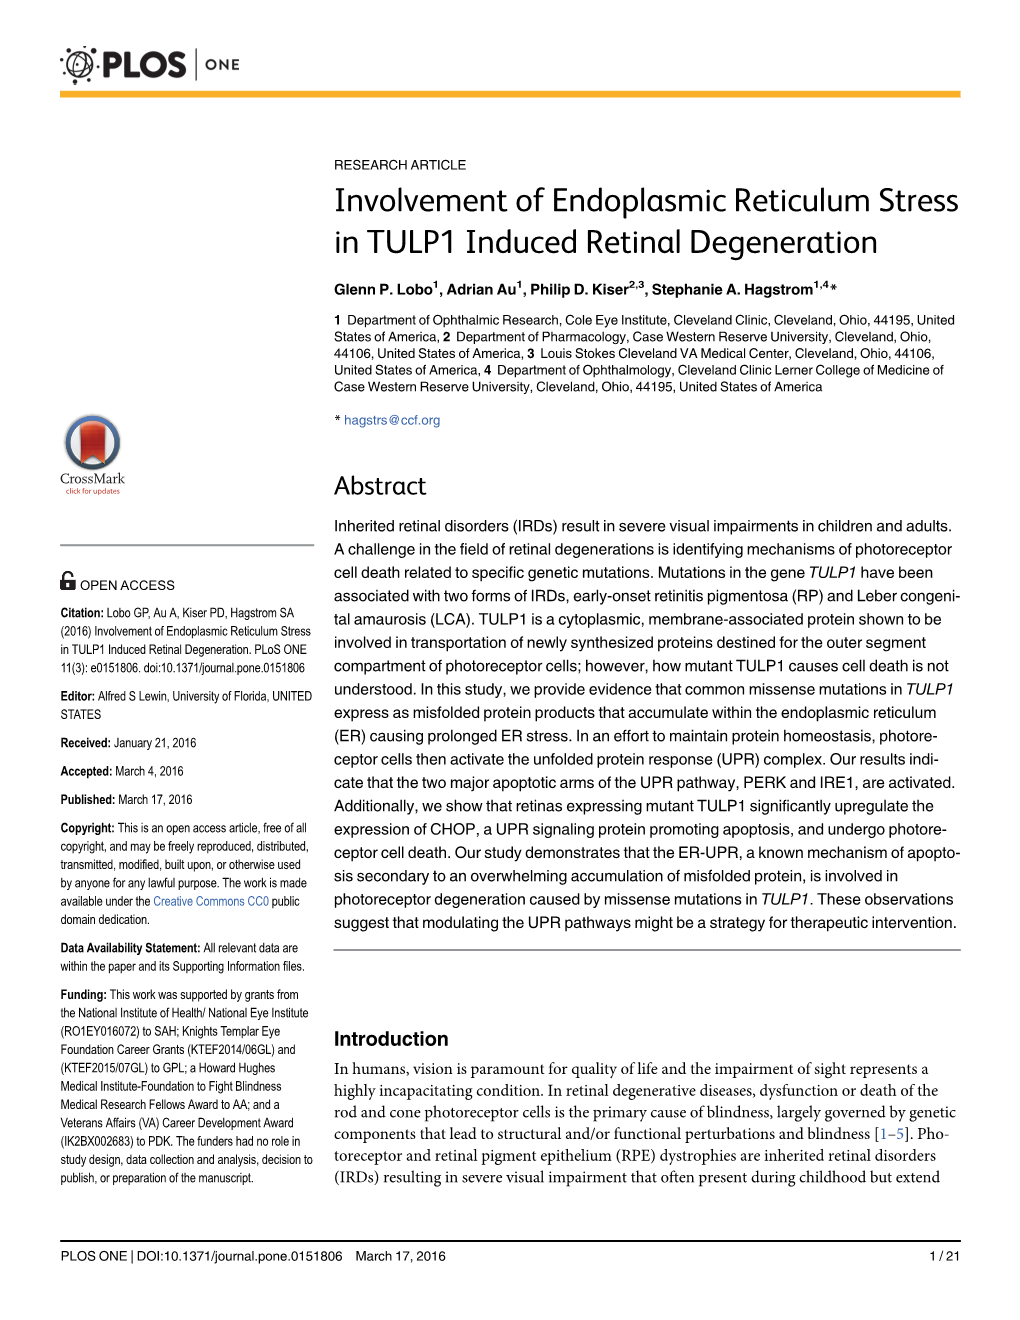 Involvement of Endoplasmic Reticulum Stress in TULP1 Induced Retinal Degeneration